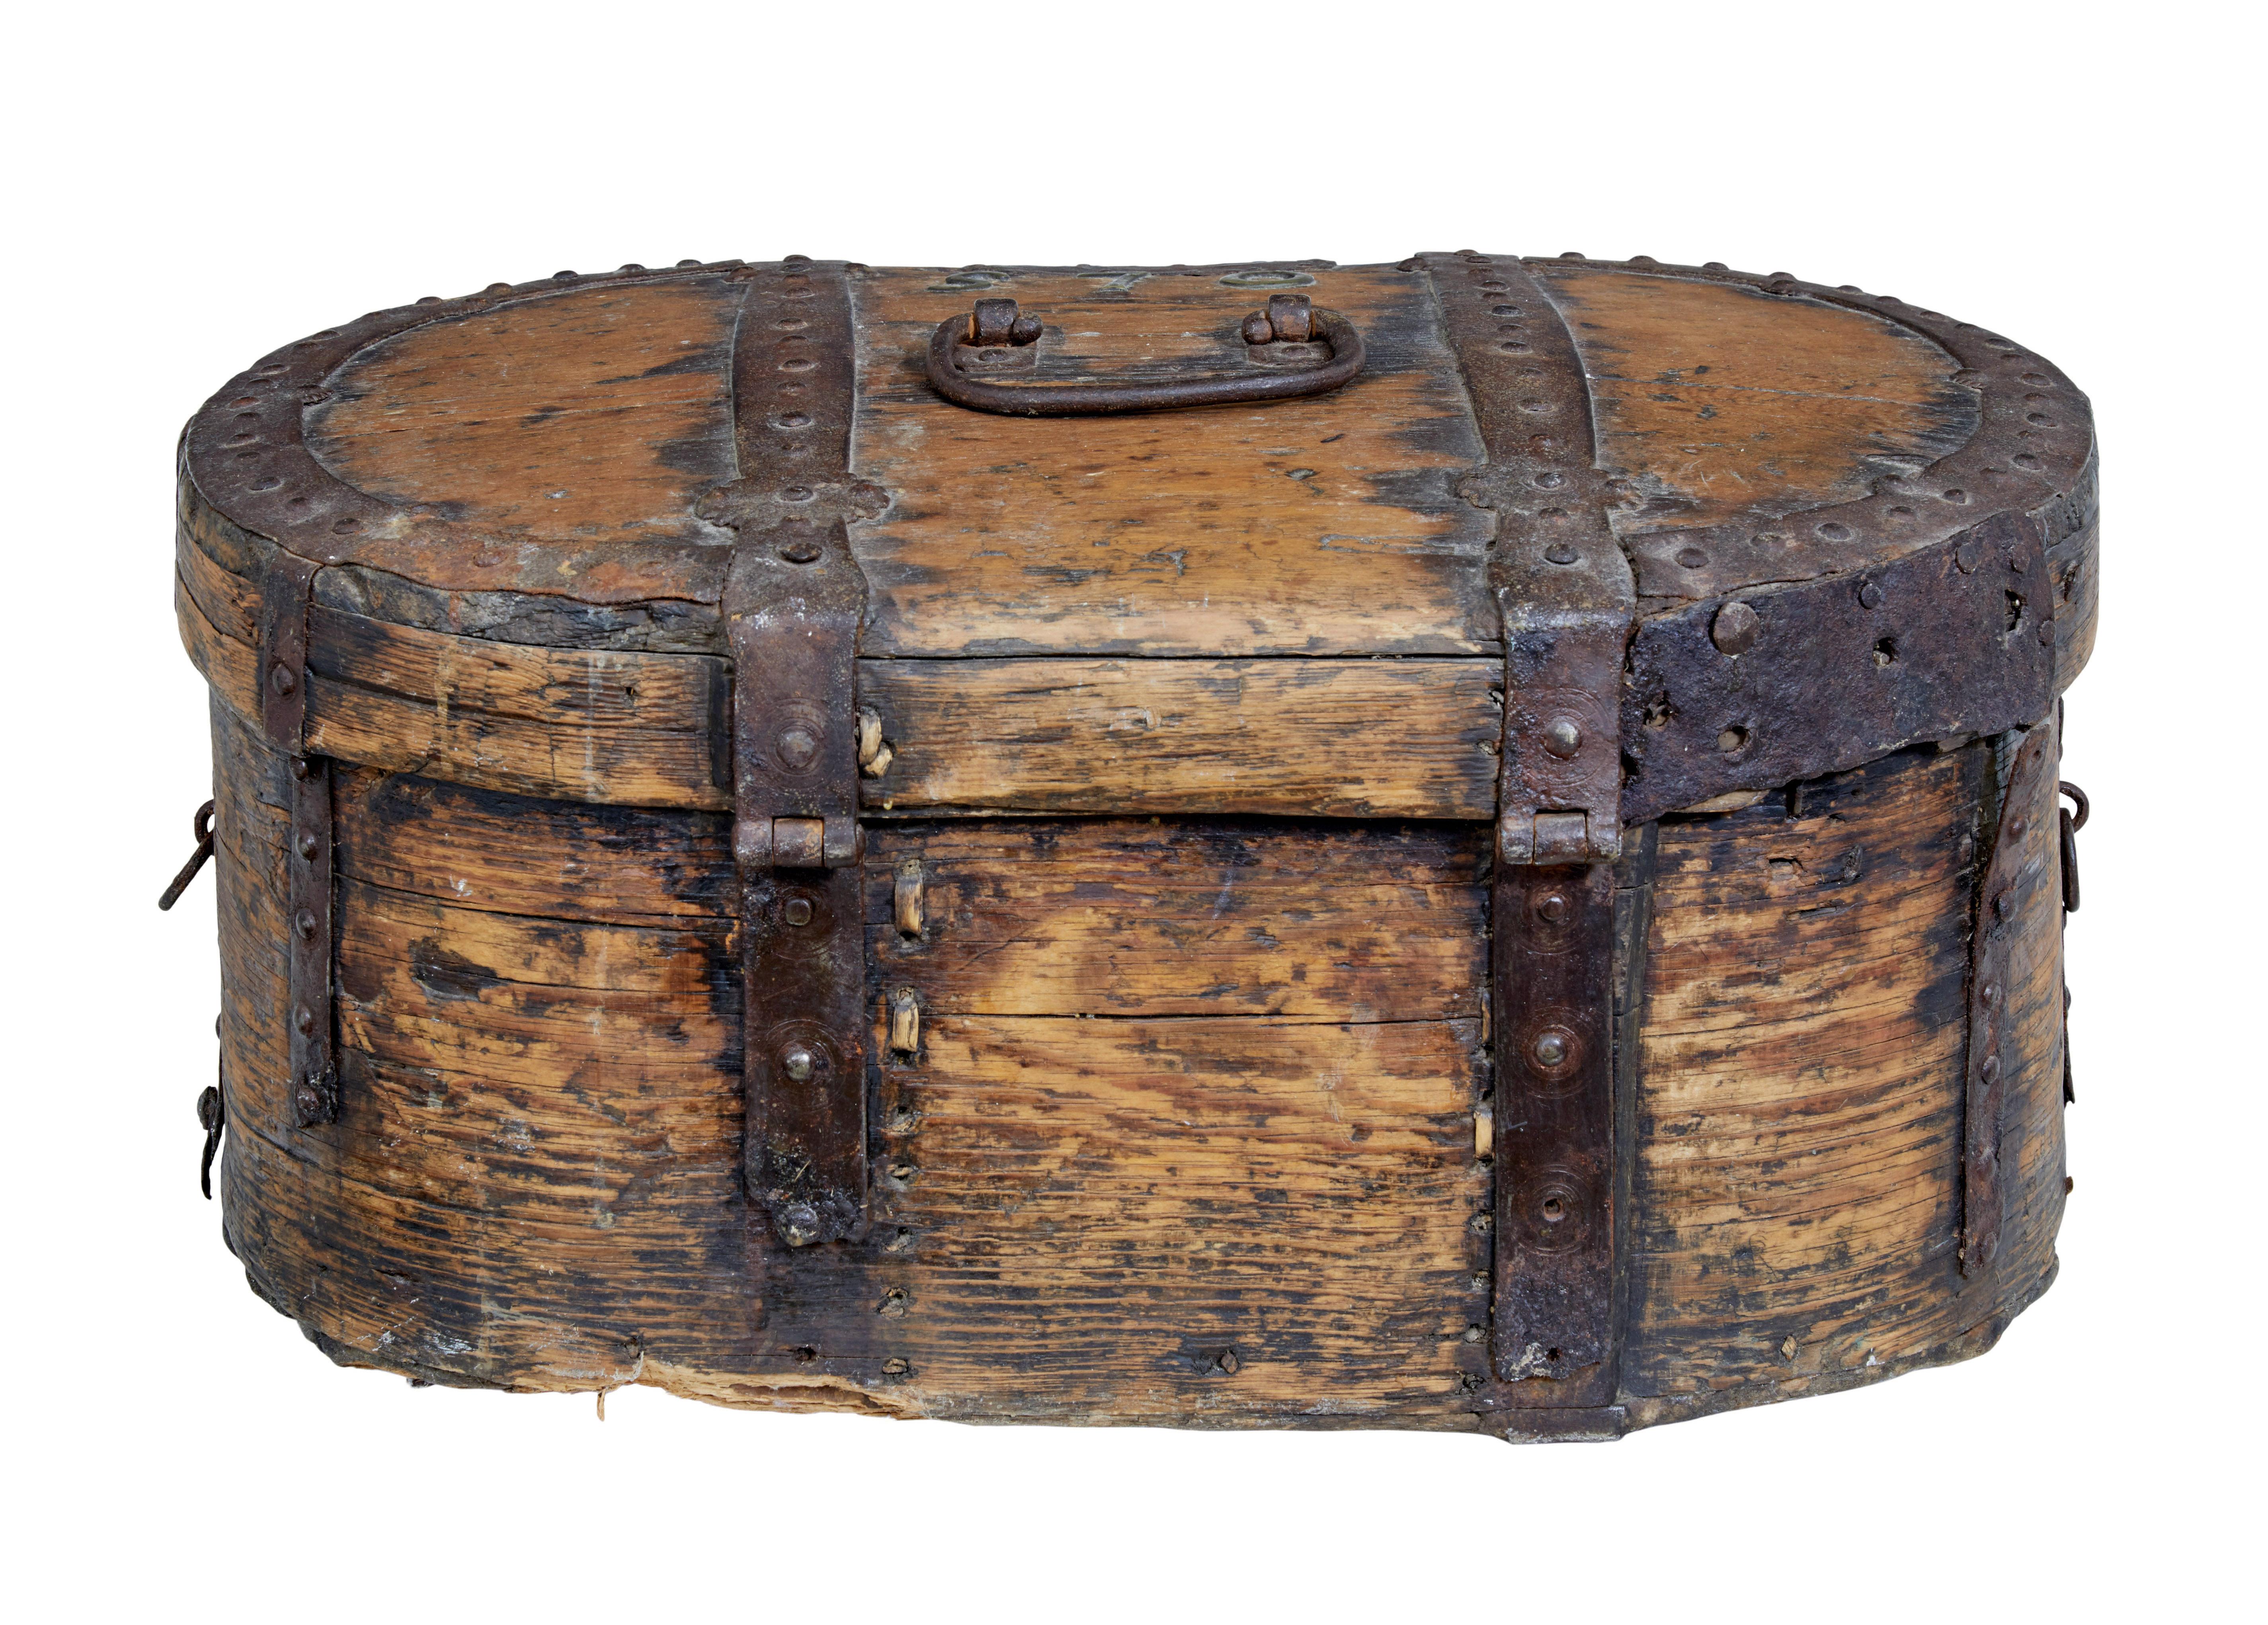 Baroque Early 18th century Scandinavian baroque oak iron bound box For Sale